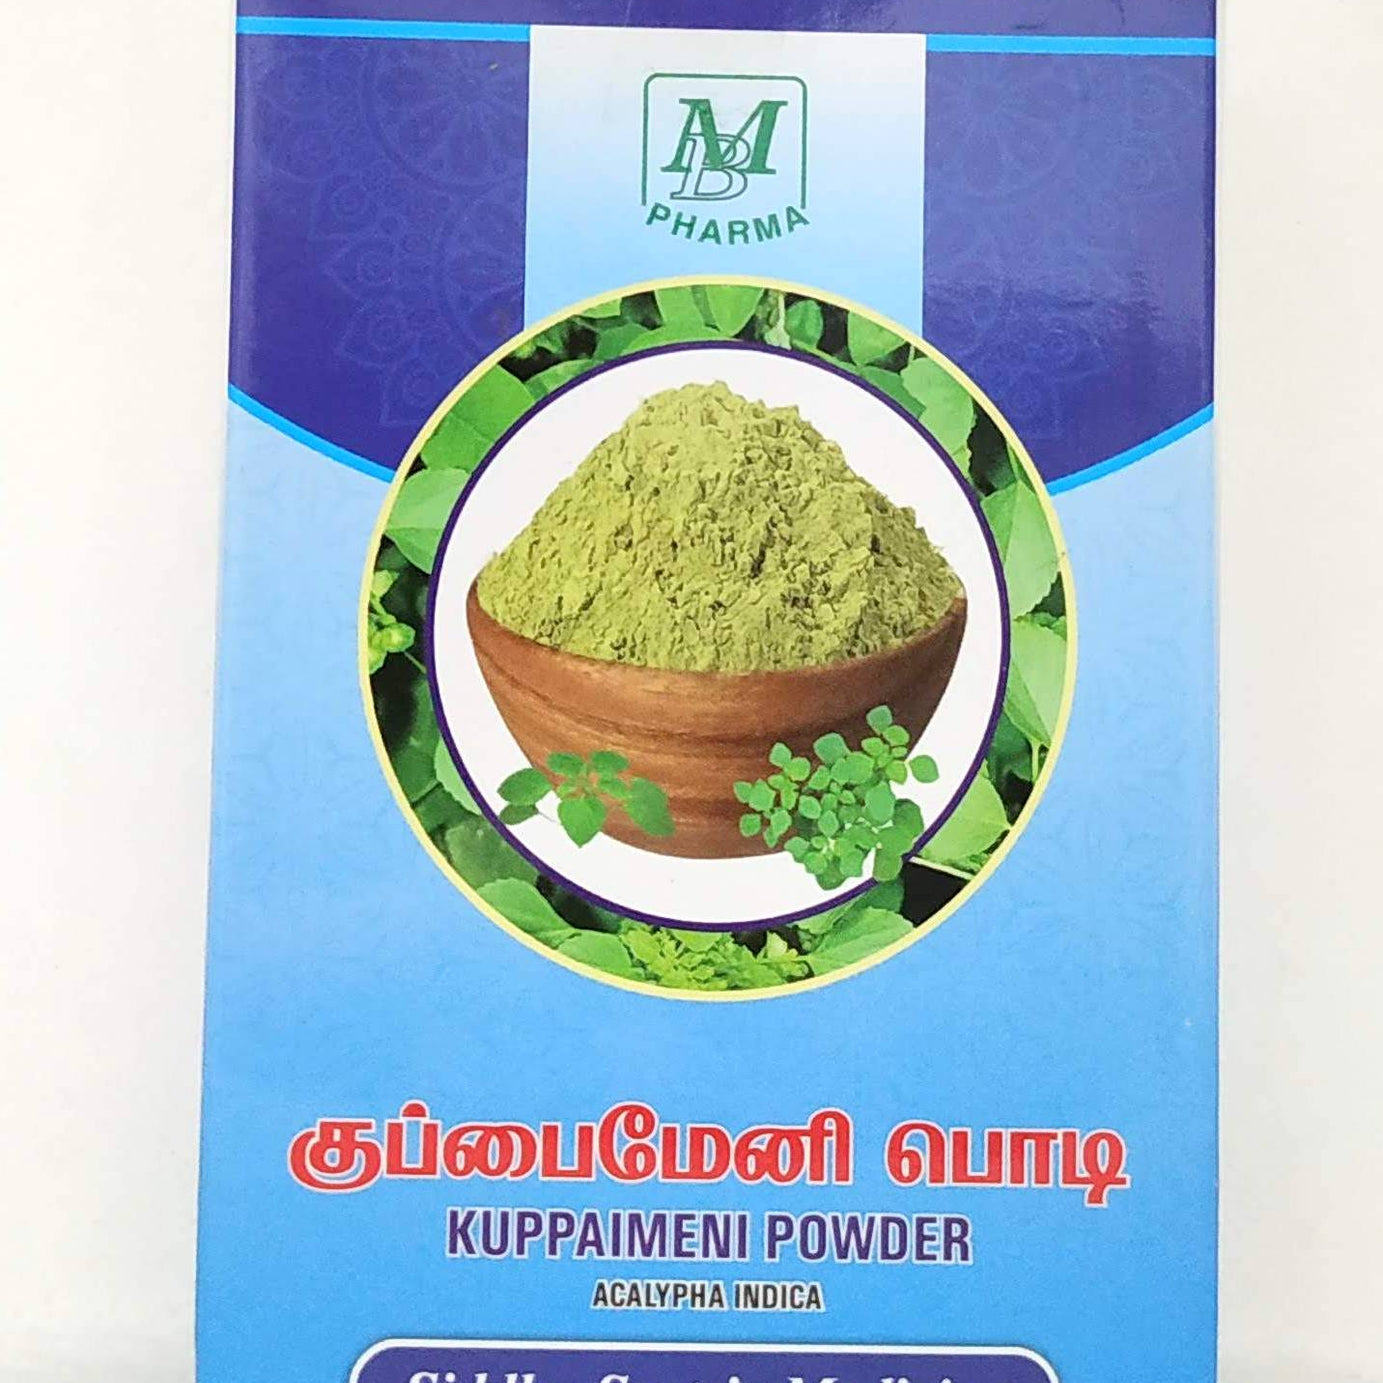 Shop Kuppaimeni powder 50gm at price 36.00 from MB Pharma Online - Ayush Care